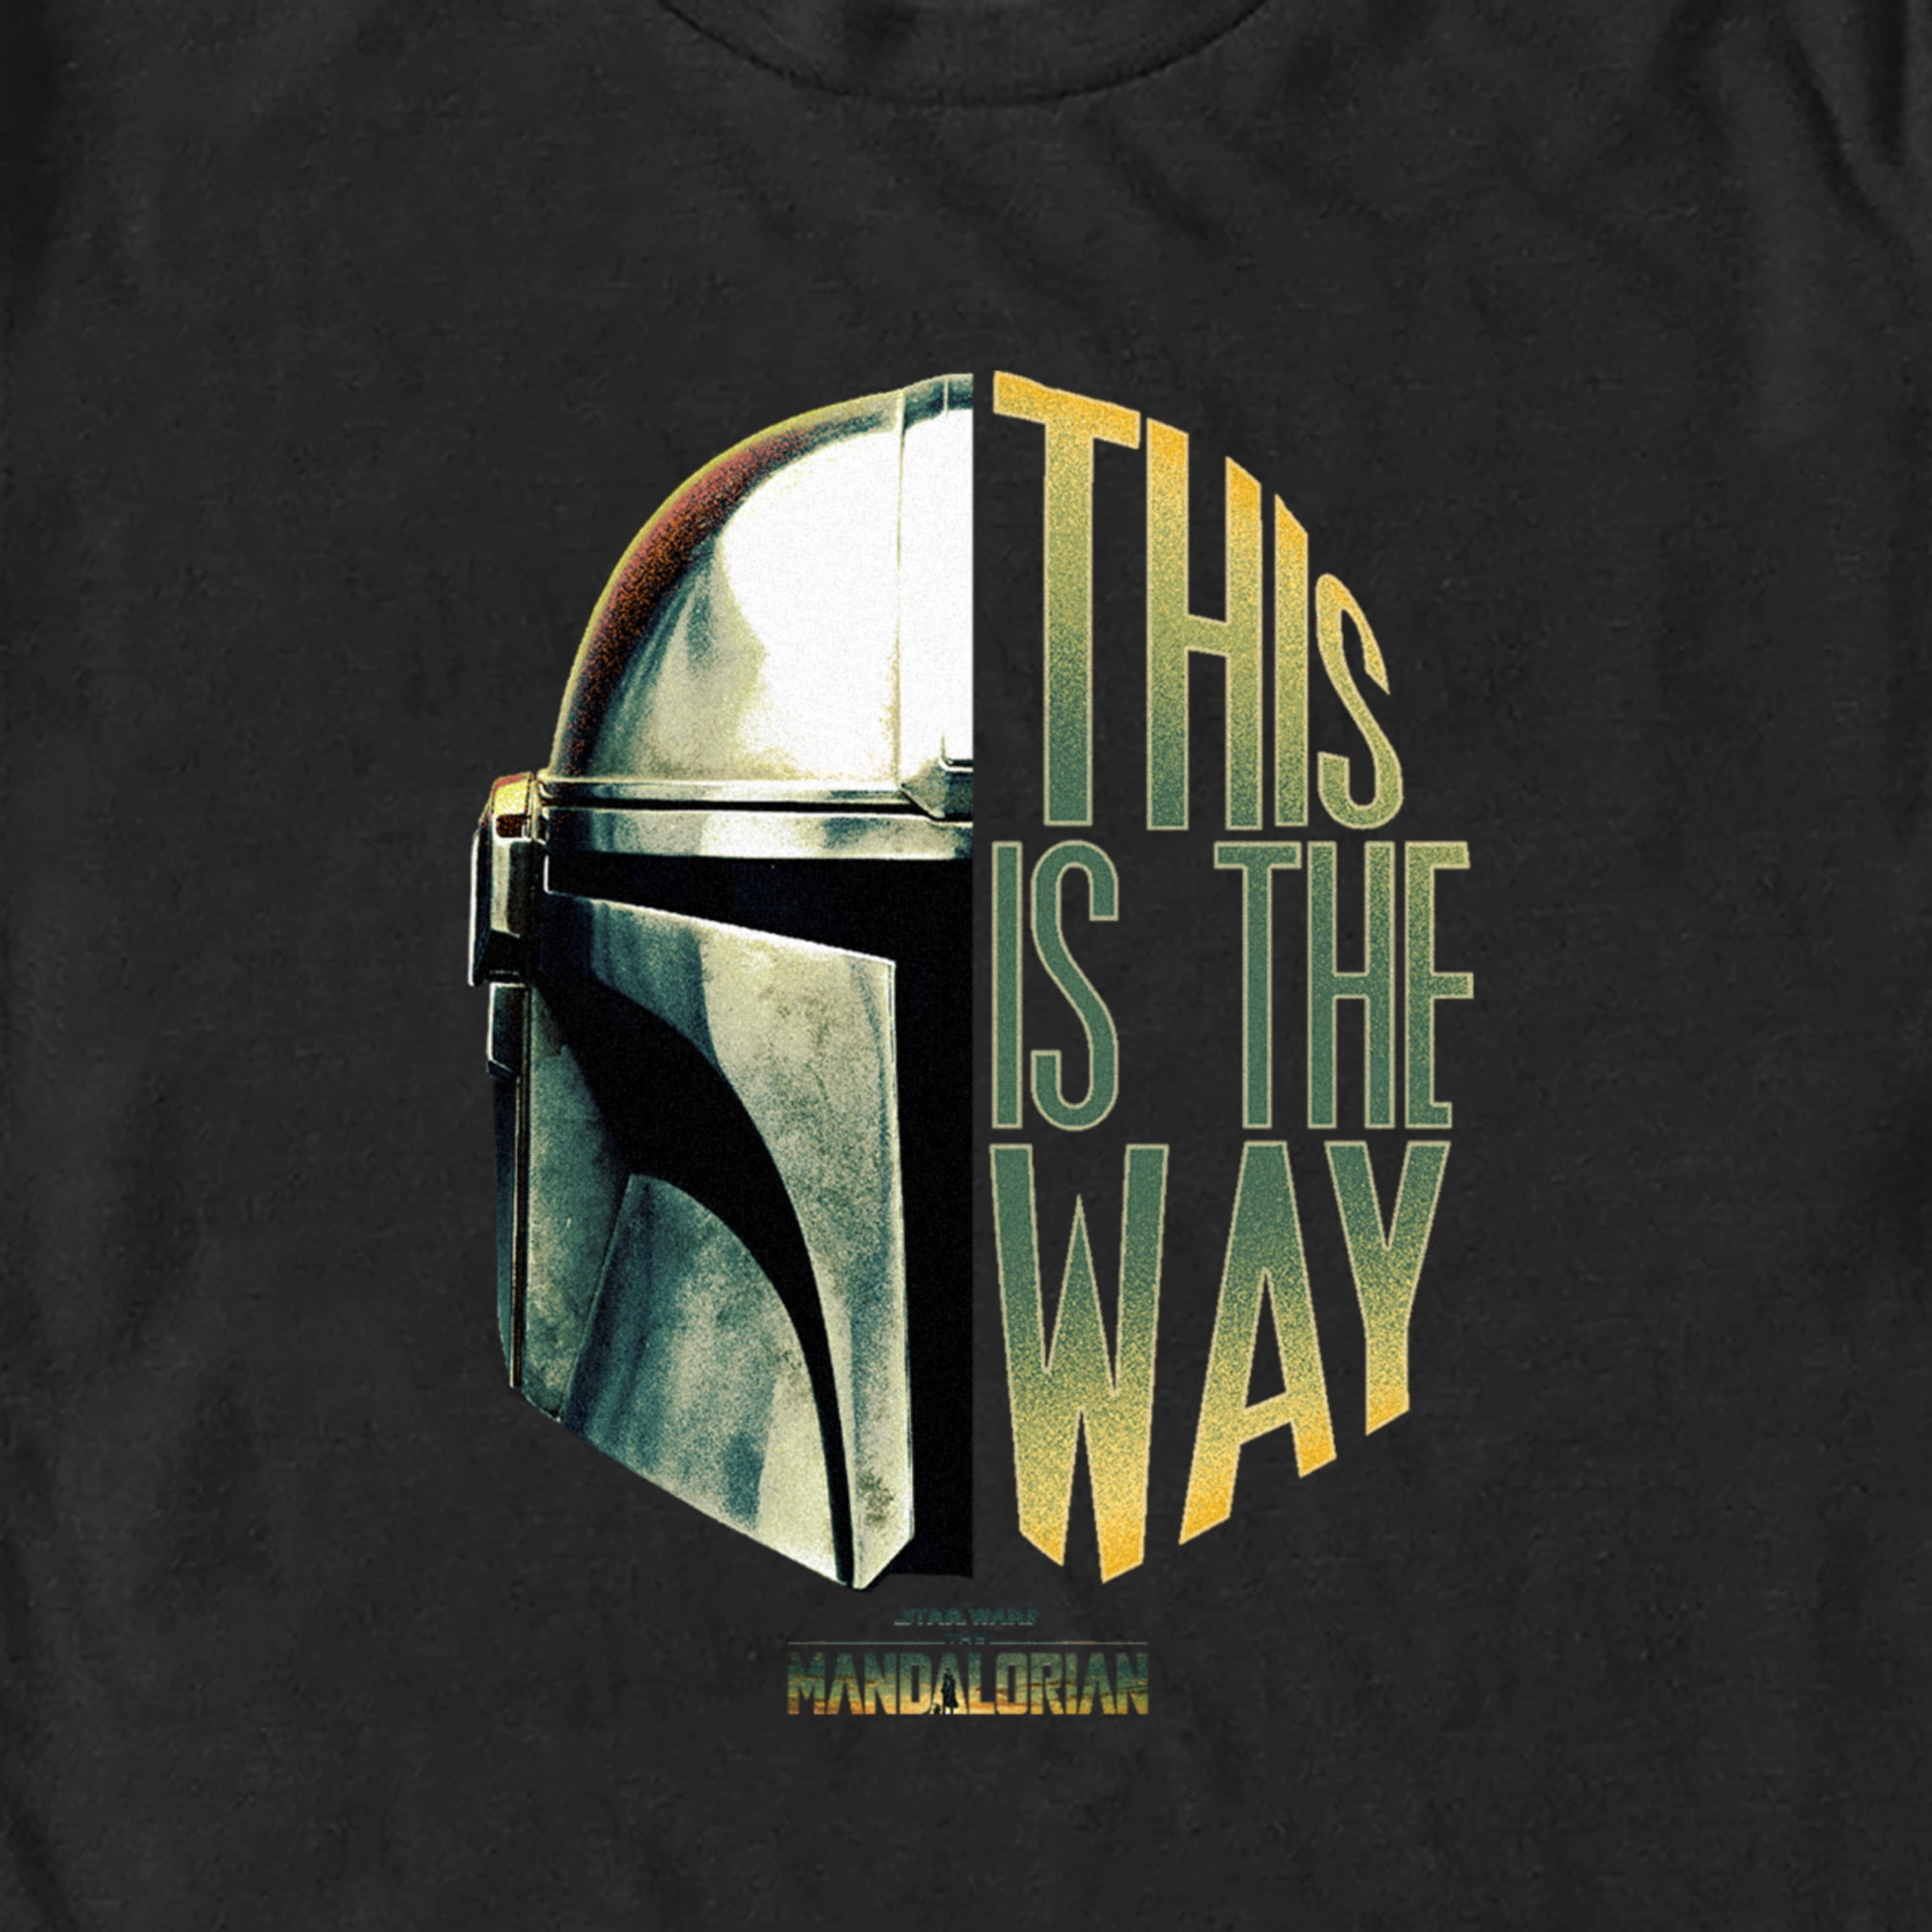 Men\'s Star Wars: Way Helmet Logo The Mandalorian is Graphic This Black the Large Tee